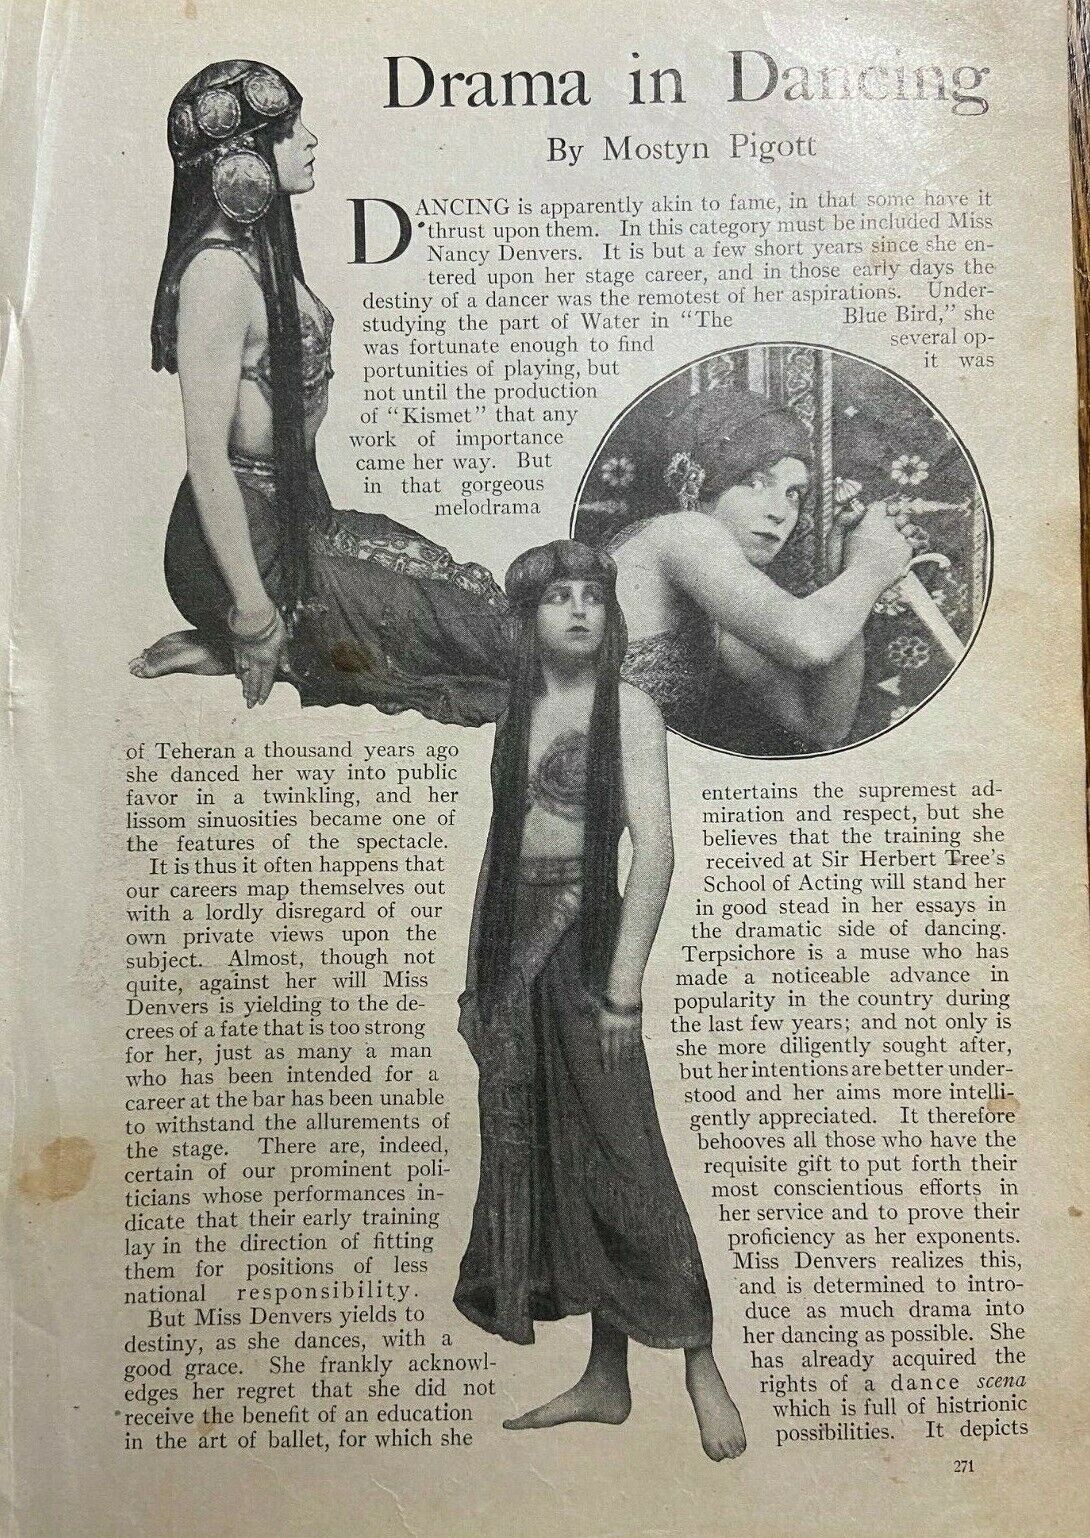 1912 Actress / Dancer Nancy Devers illustrated